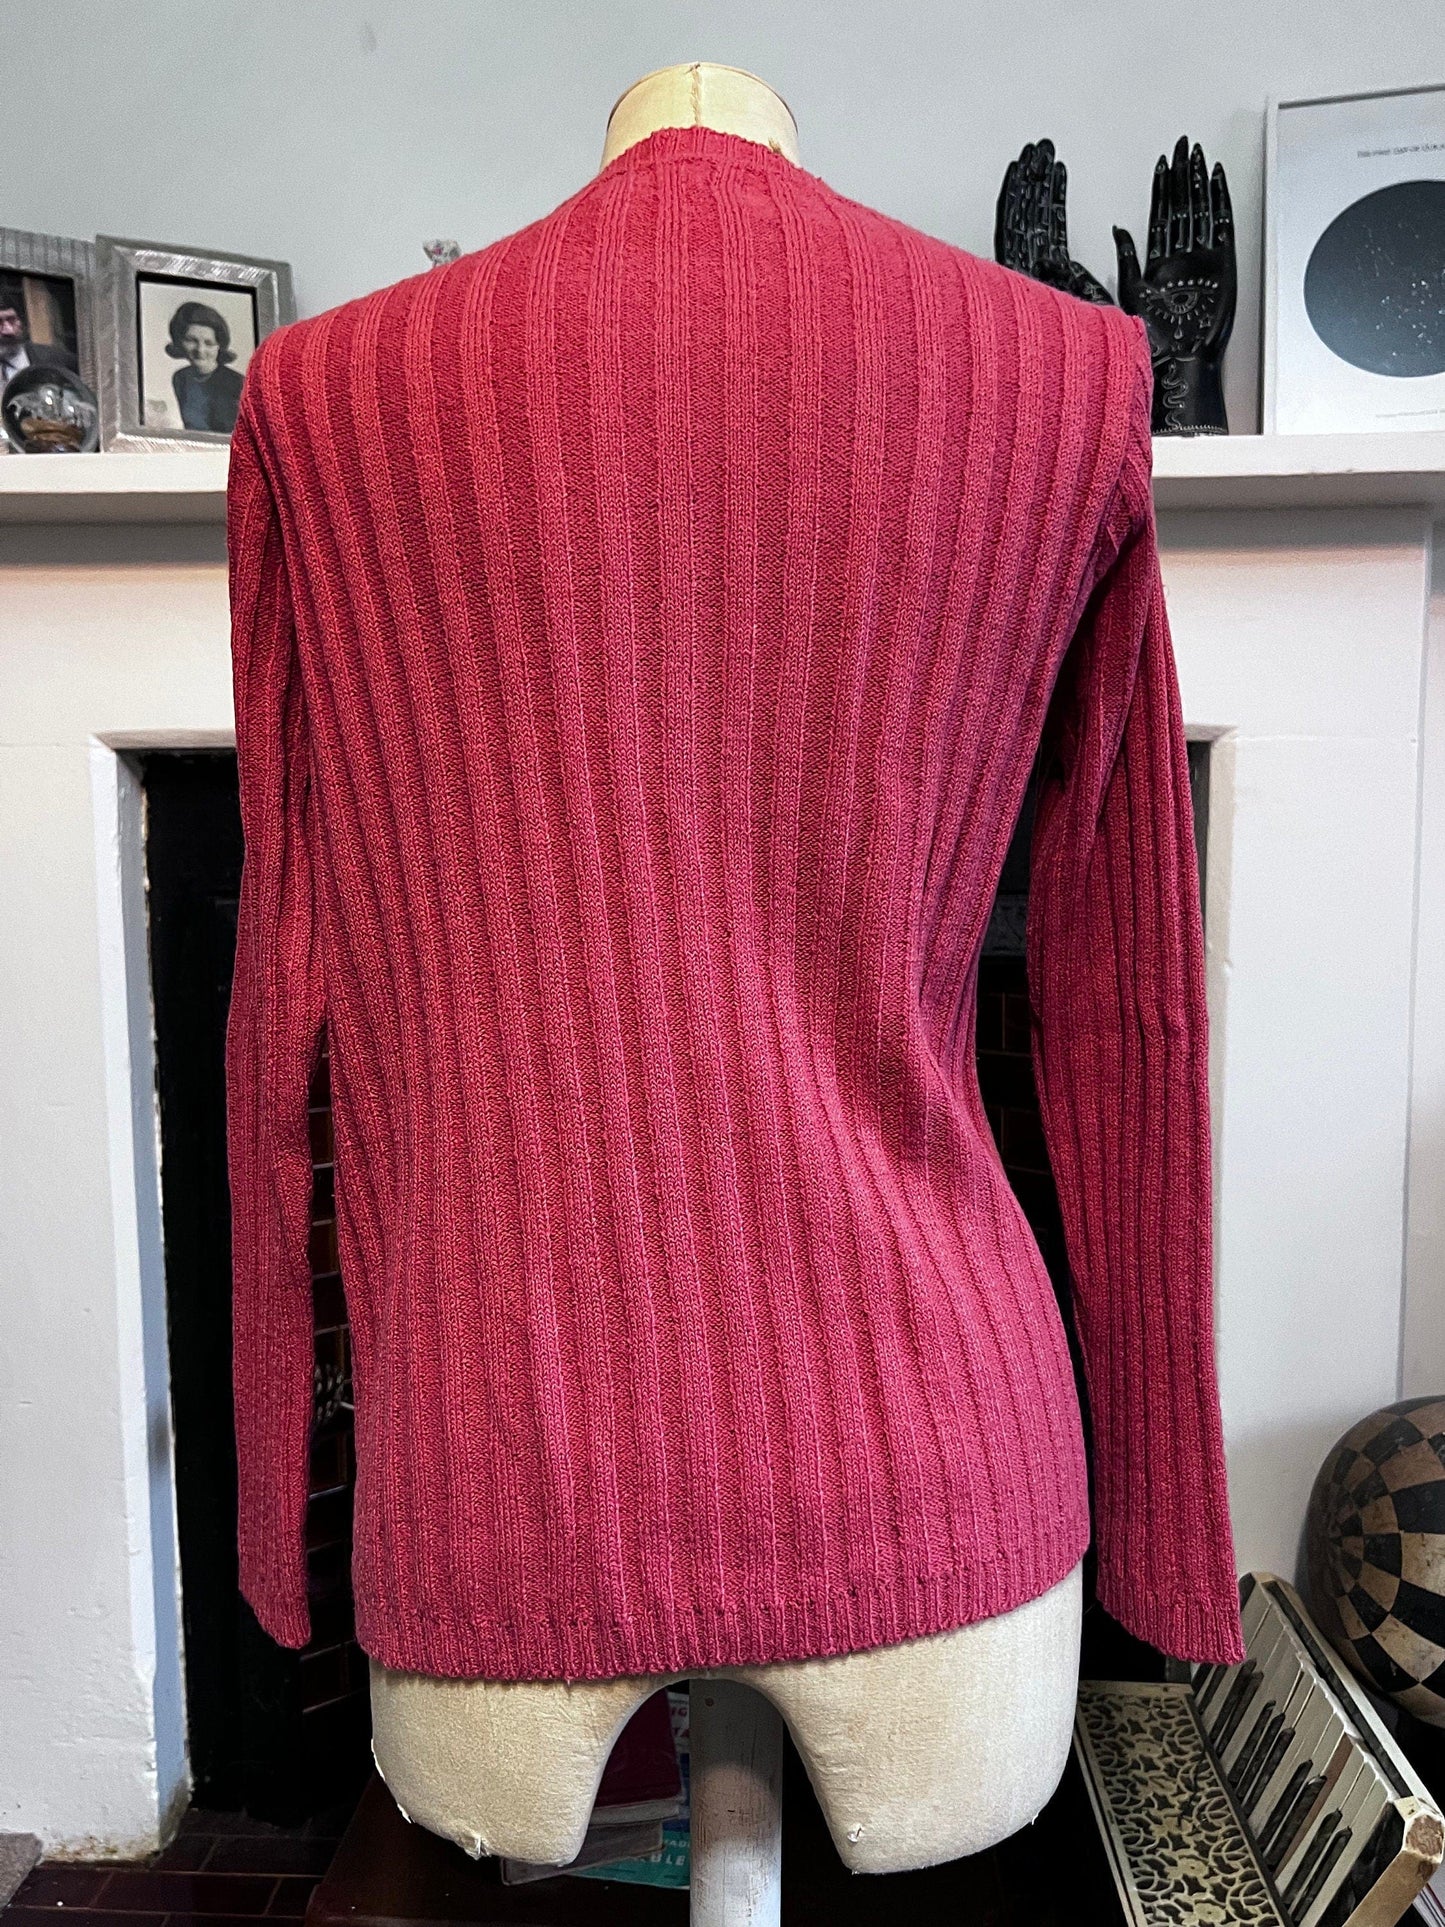 Vintage pink orange jaeger cardigan, pink cardigan, pink vintage knitwear, vintage cardigan, vintage cardi, 1980s, vintage knitwear, jaeger